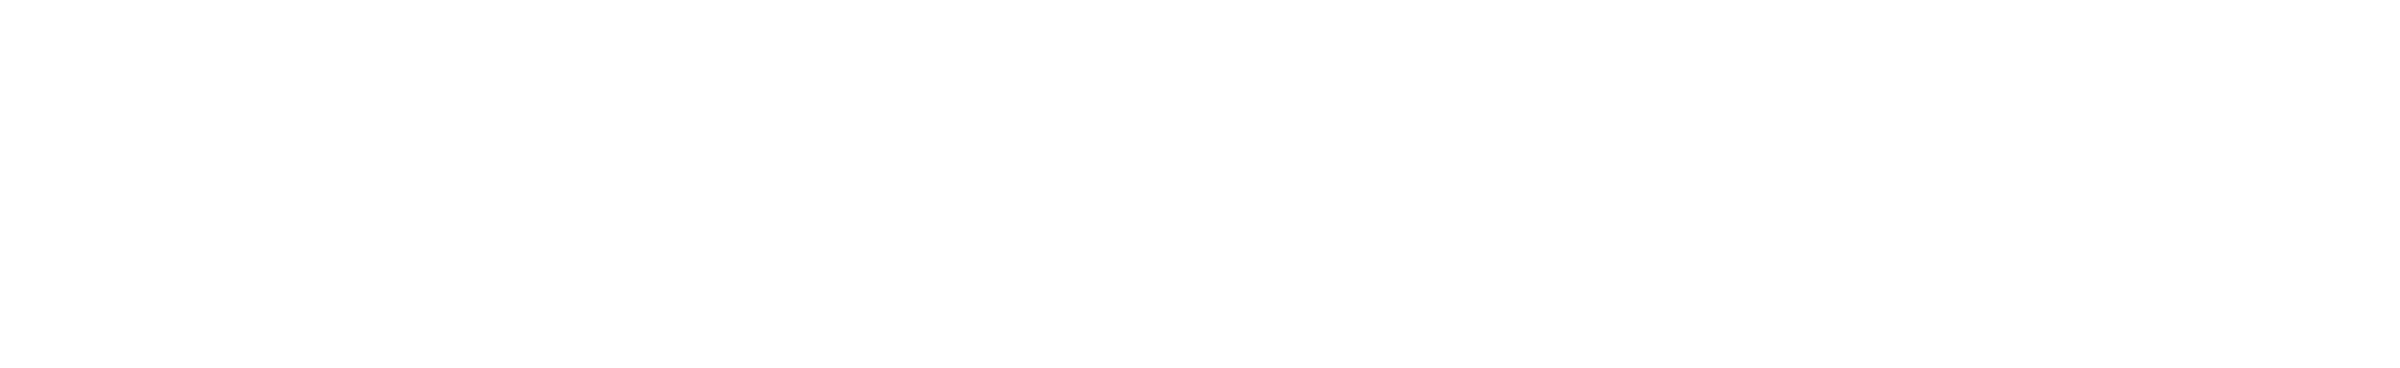 Finn Flare Logo